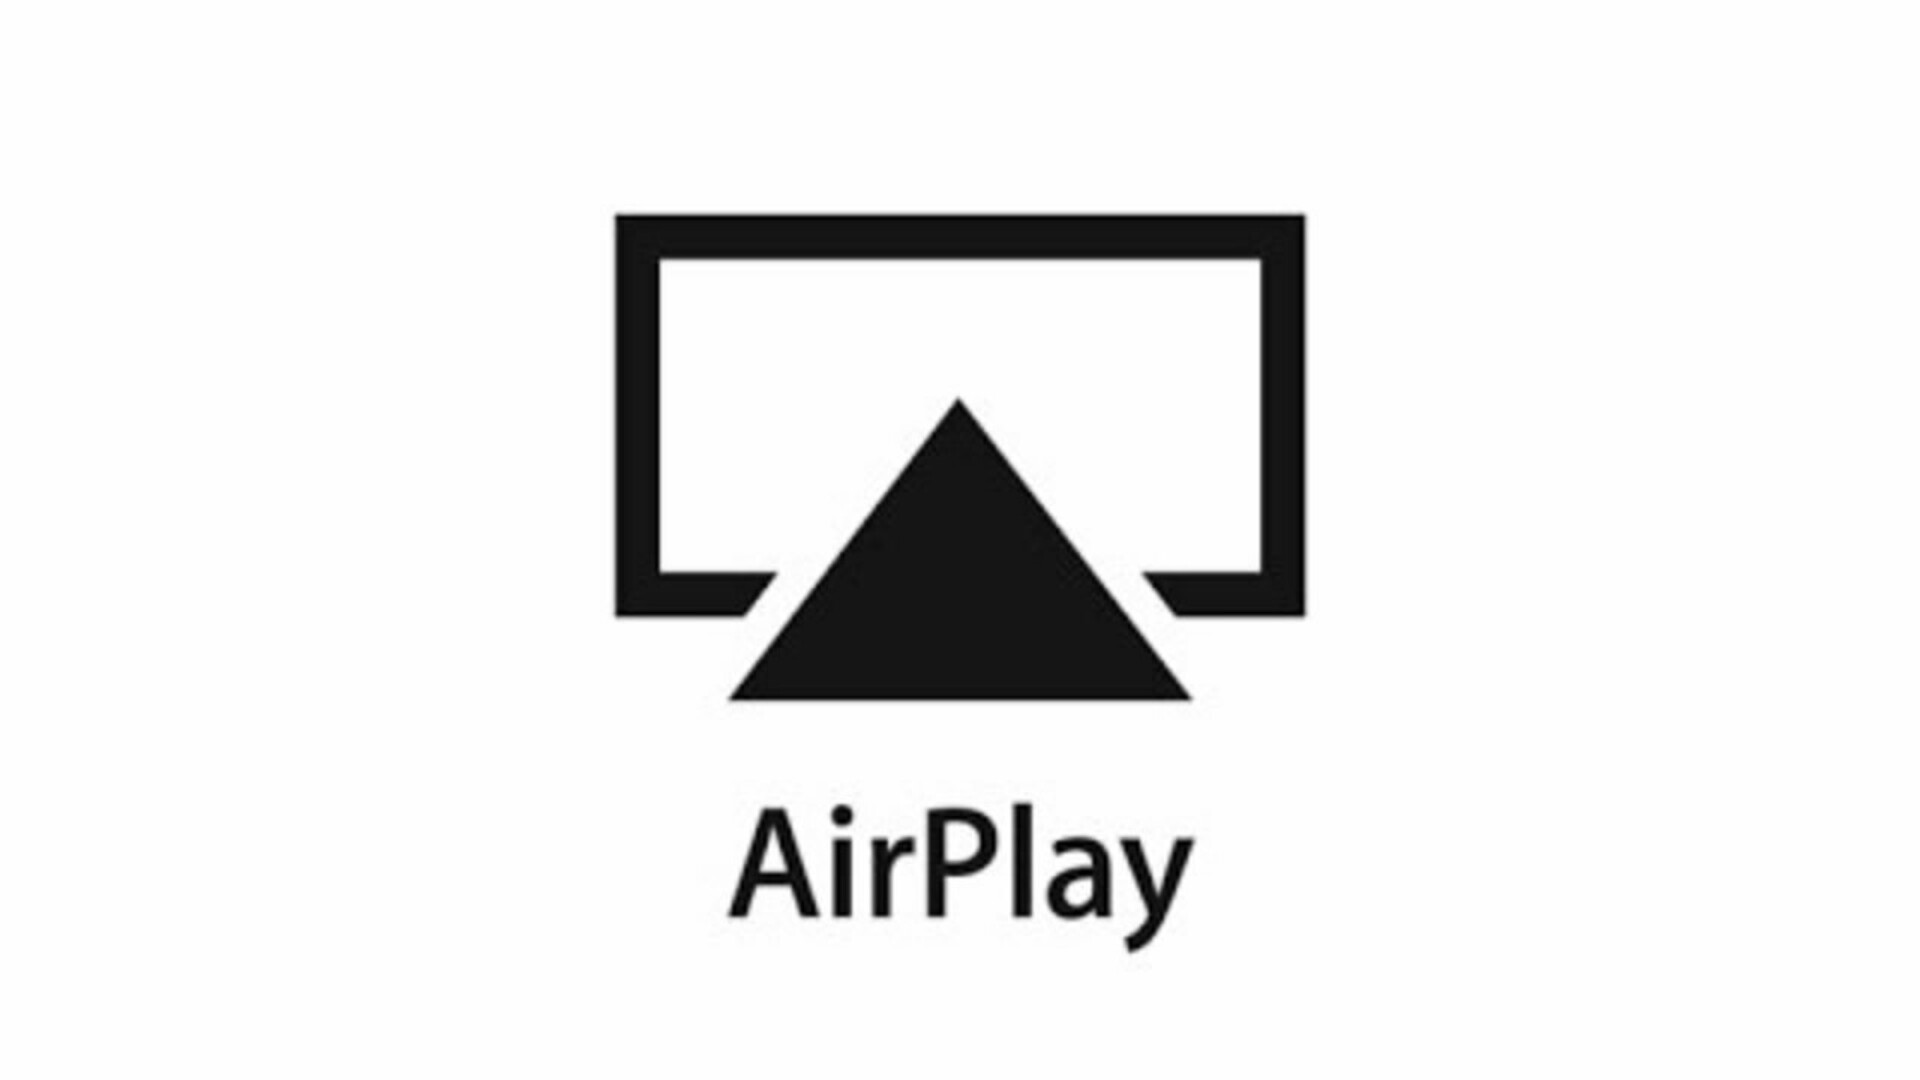 The Apple AirPlay logo.